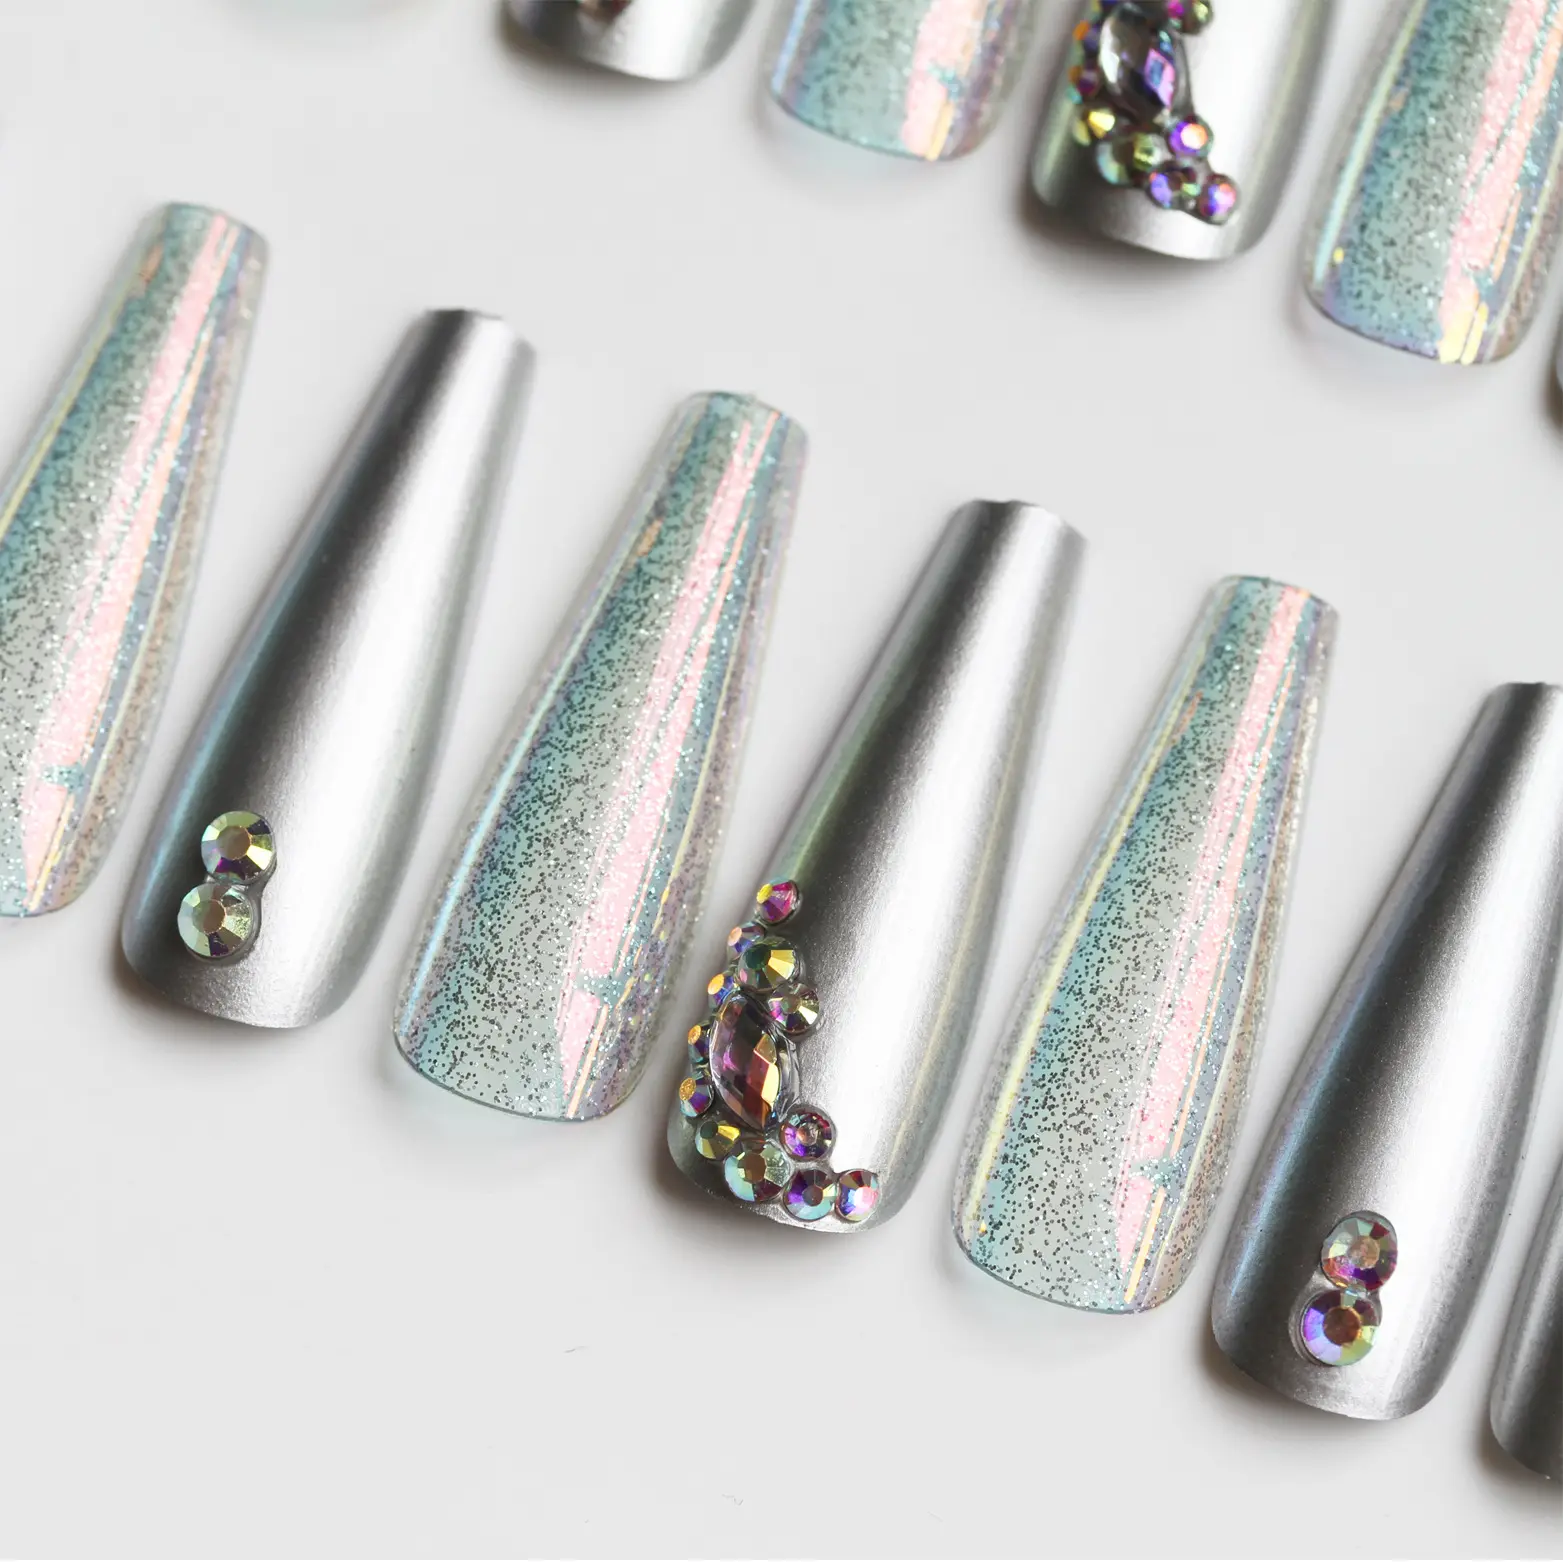 Long Coffin Diamond False Nail Tips Silver Glitter Rhinestones Press on Nails Hand Made Long Artificial Nails